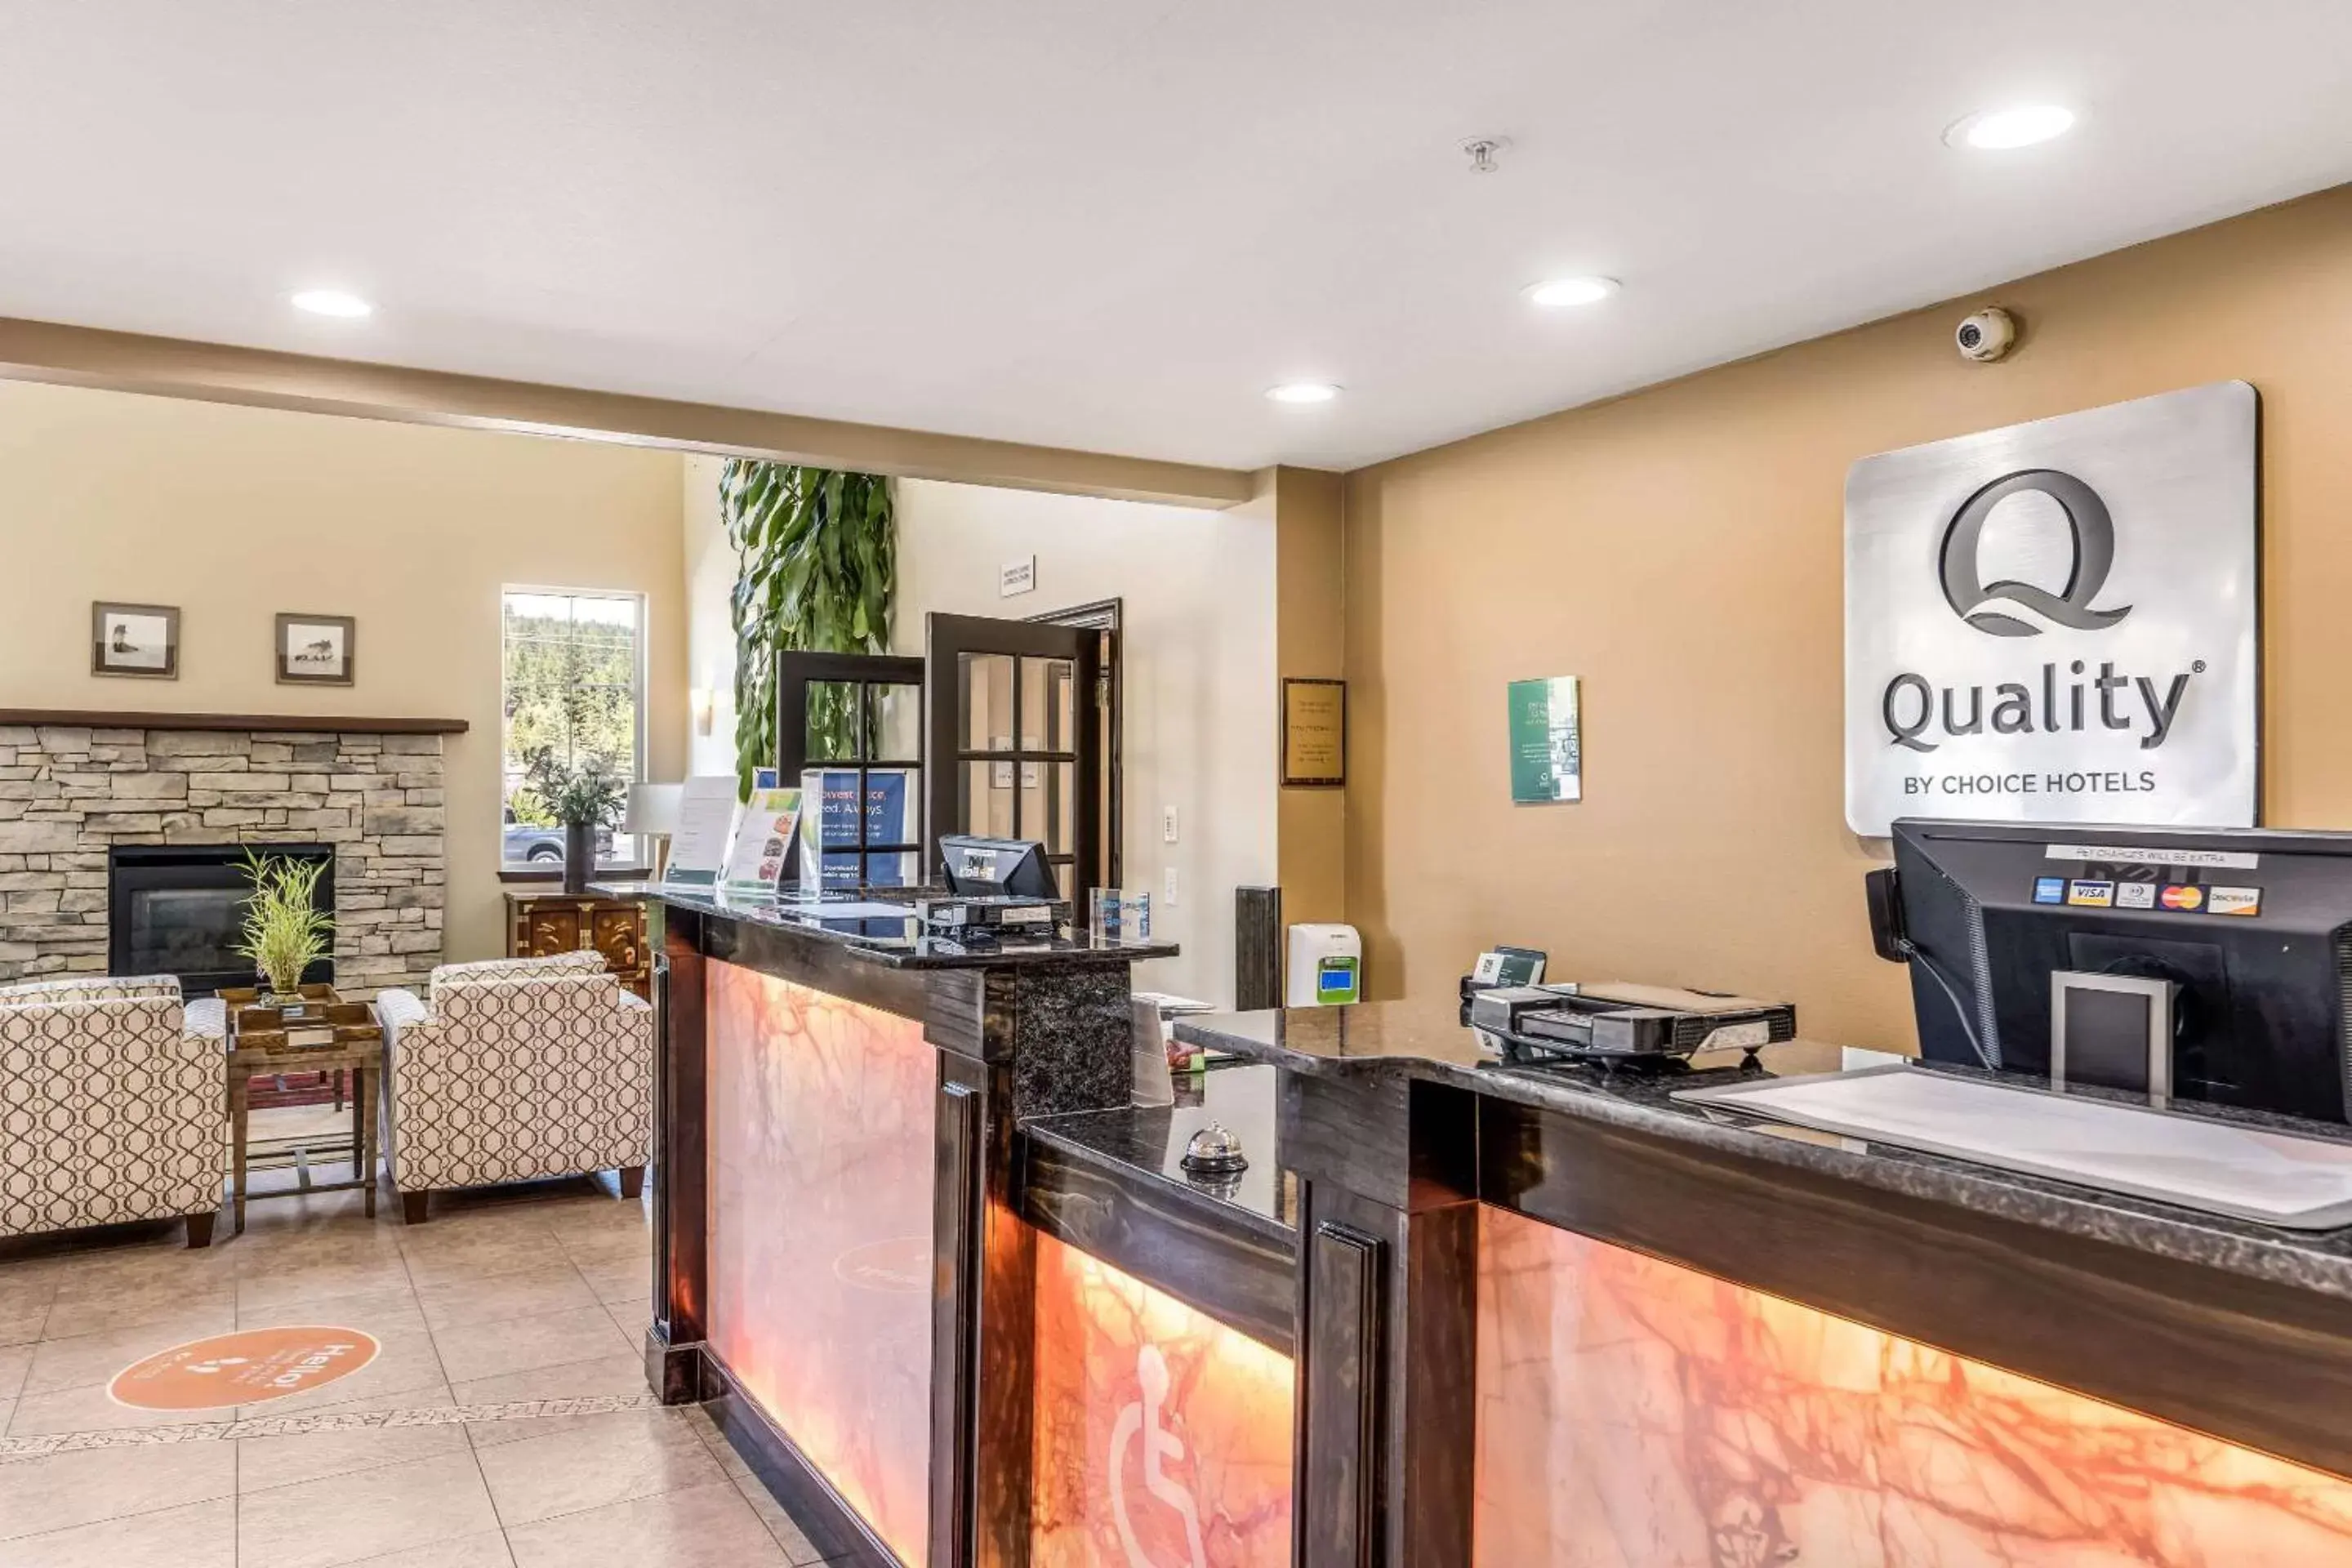 Lobby or reception in Quality Inn near Suncadia Resort